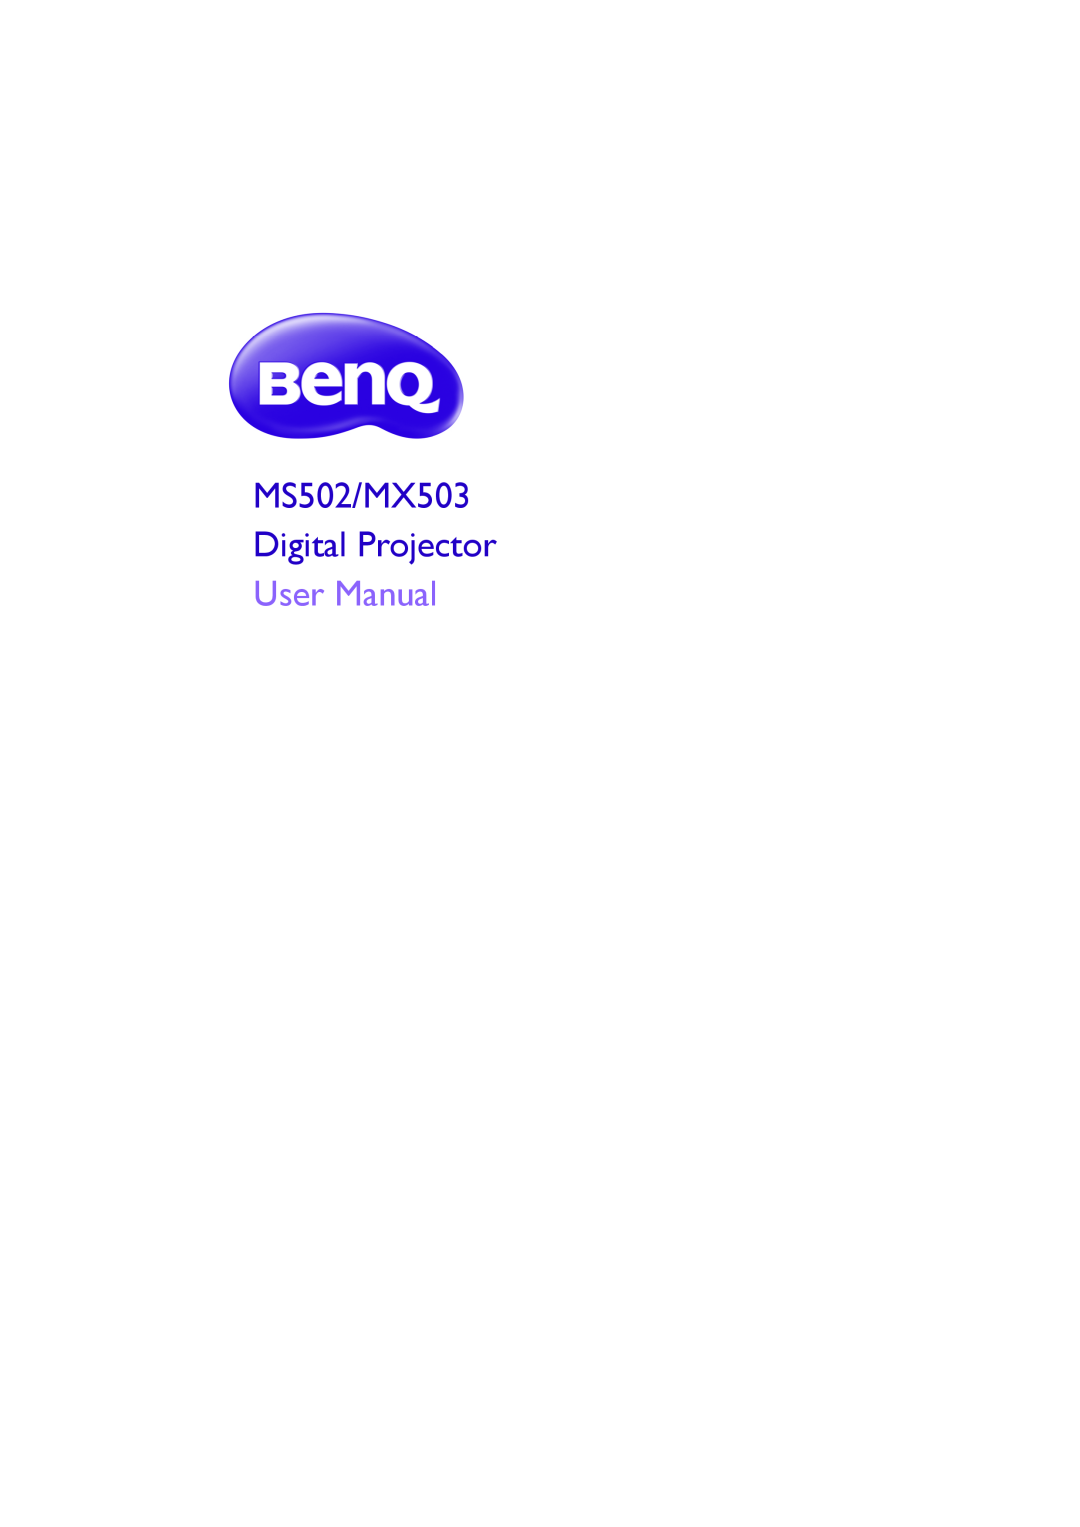 BenQ user manual MS502/MX503 Digital Projector, User Manual 